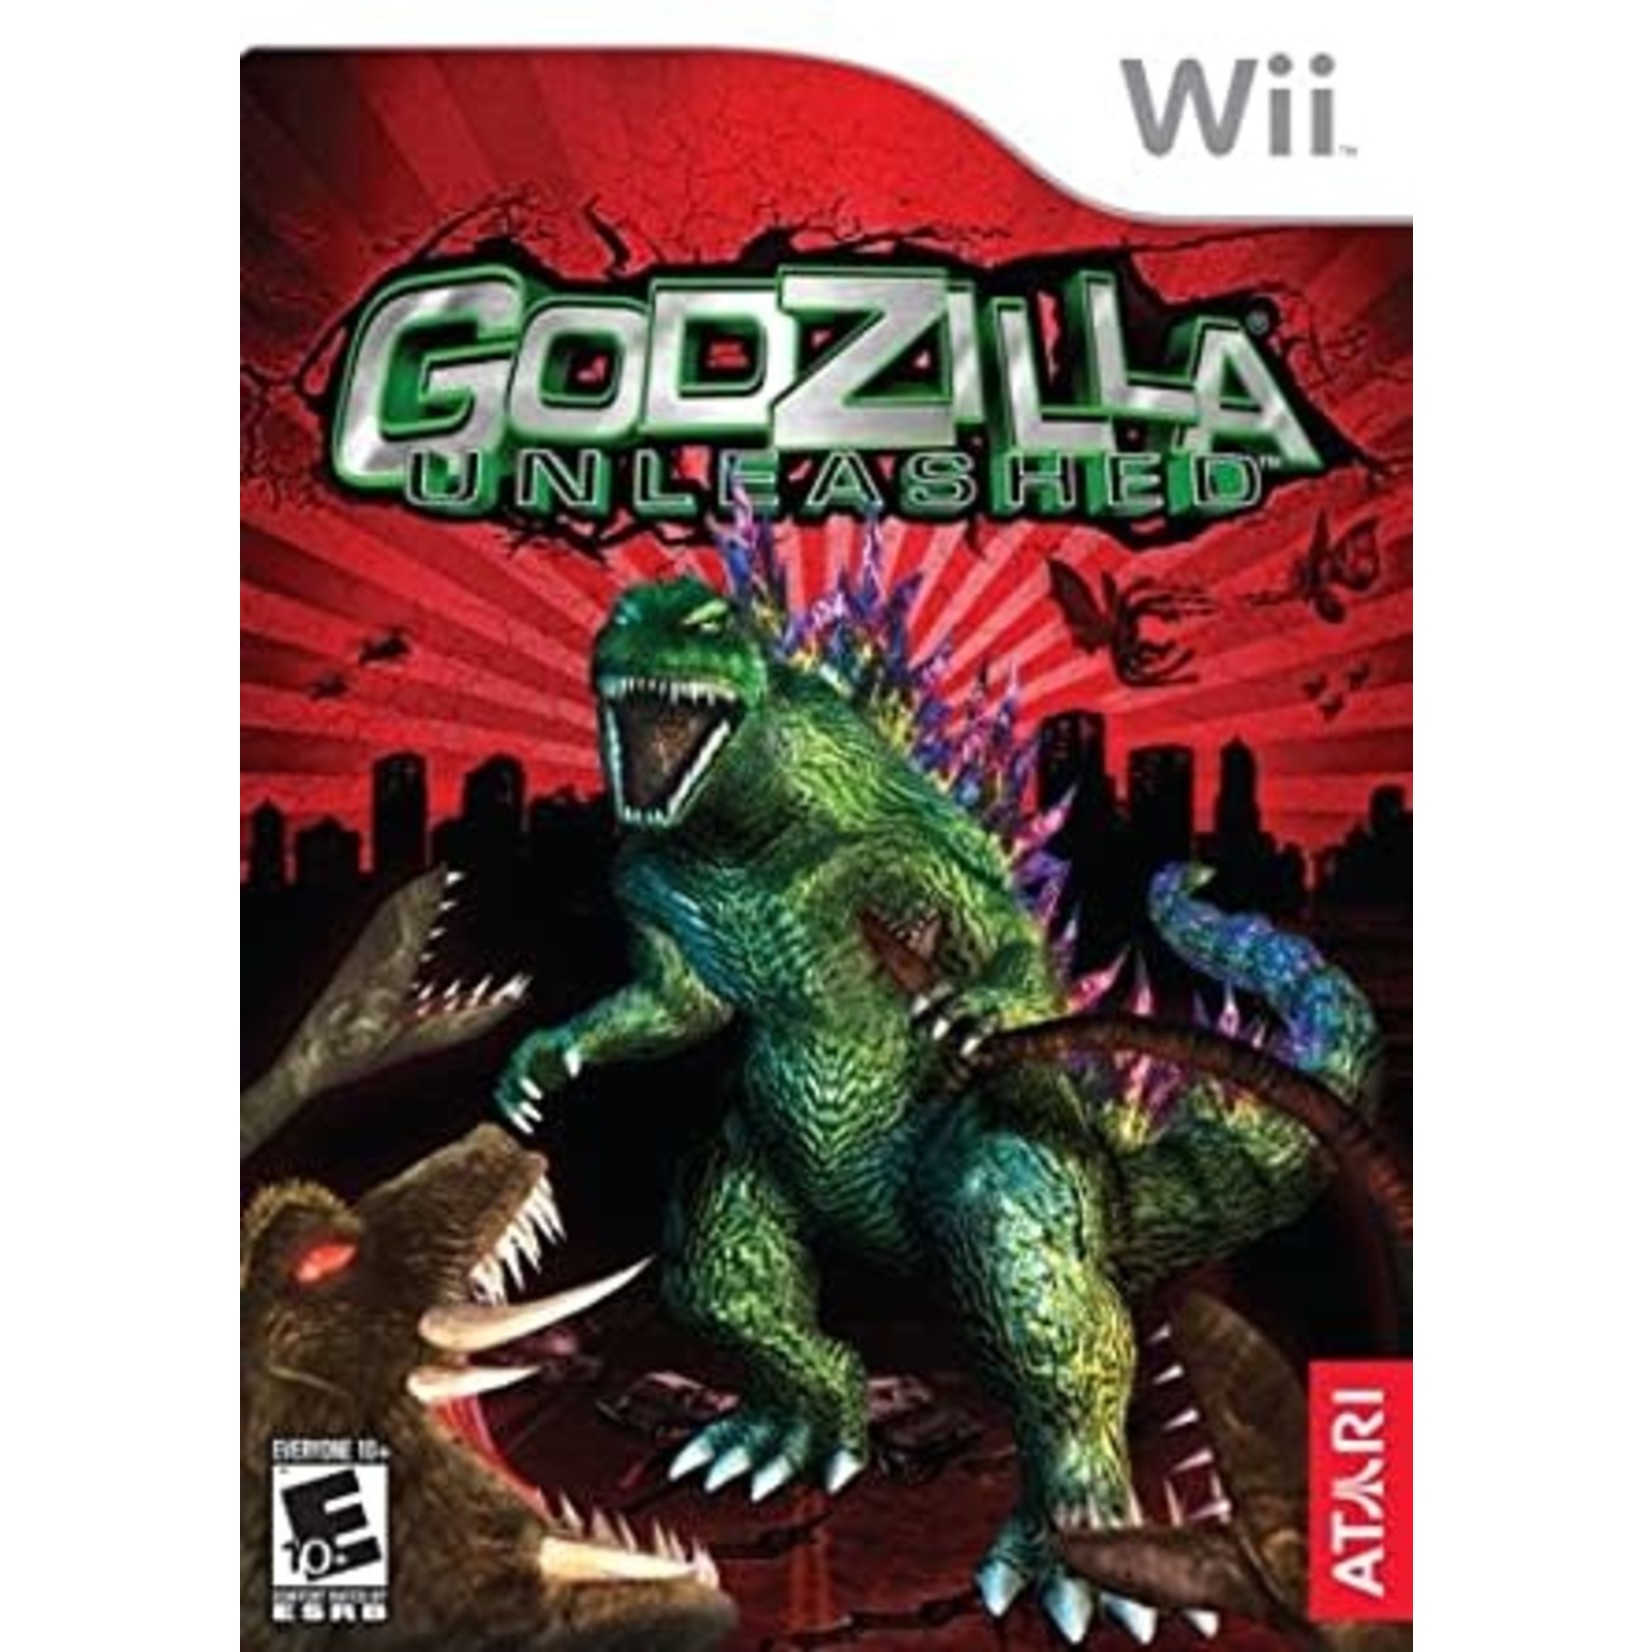 Wiiusd-Godzilla Unleashed